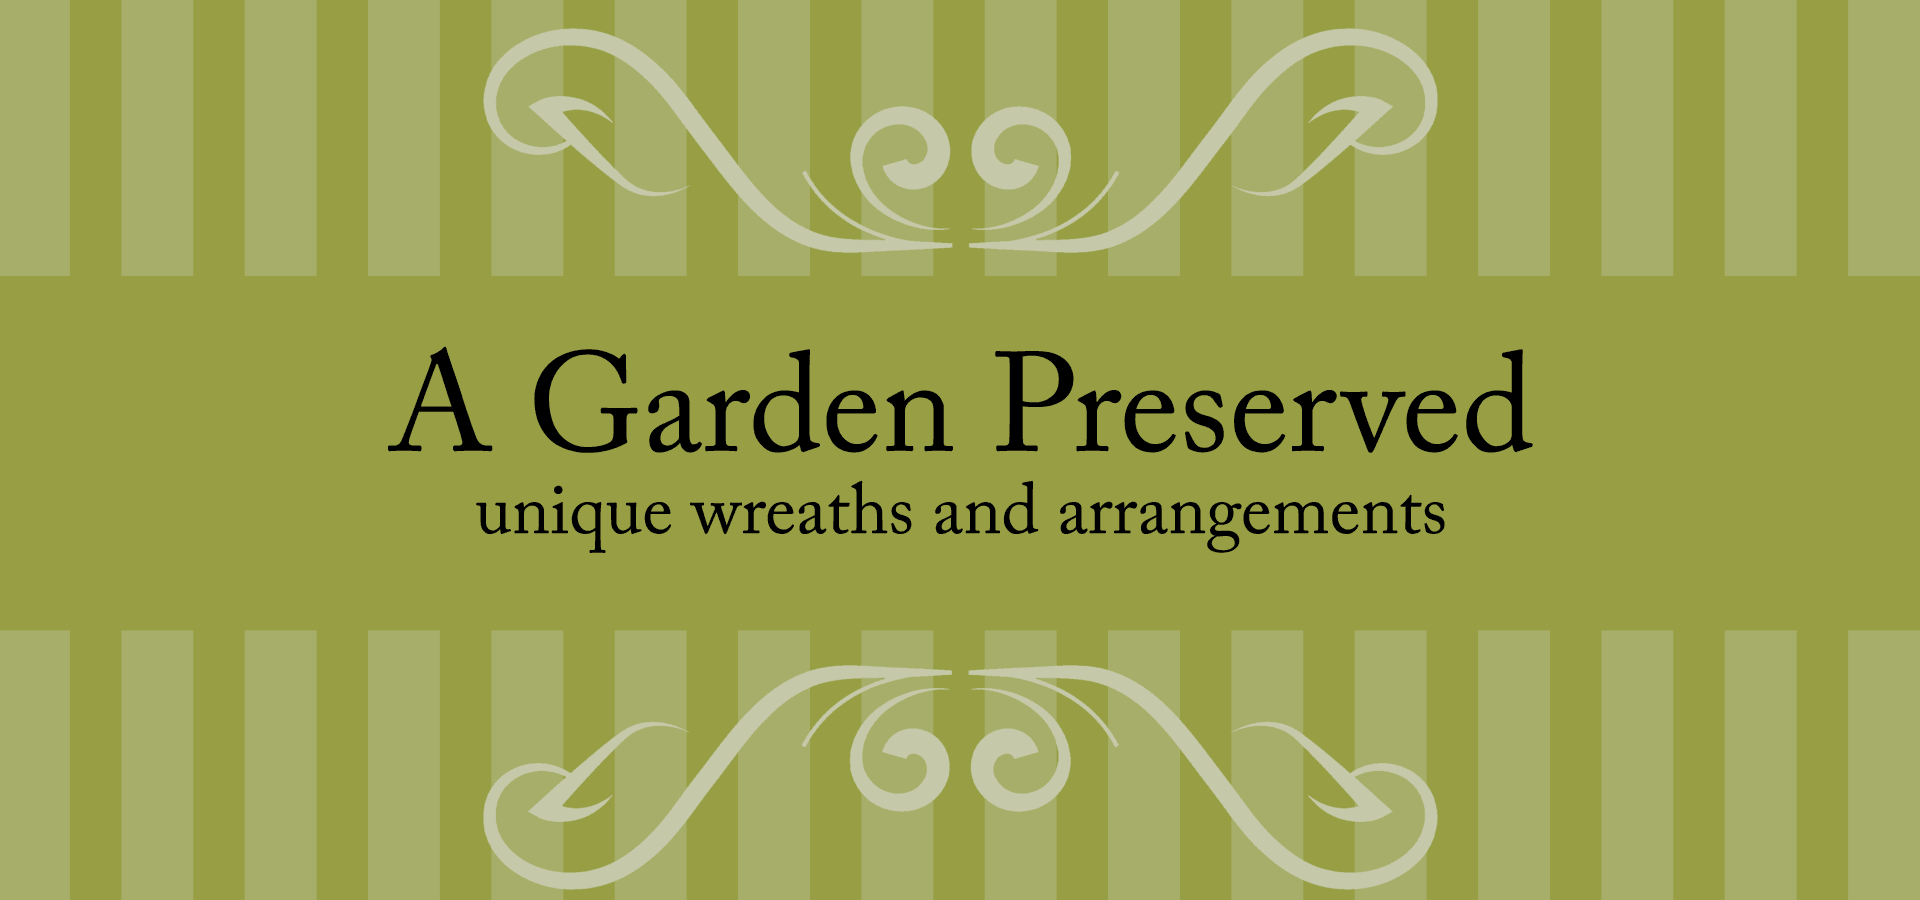 A Garden Preserved: Unique Floral Wreaths and Arrangements